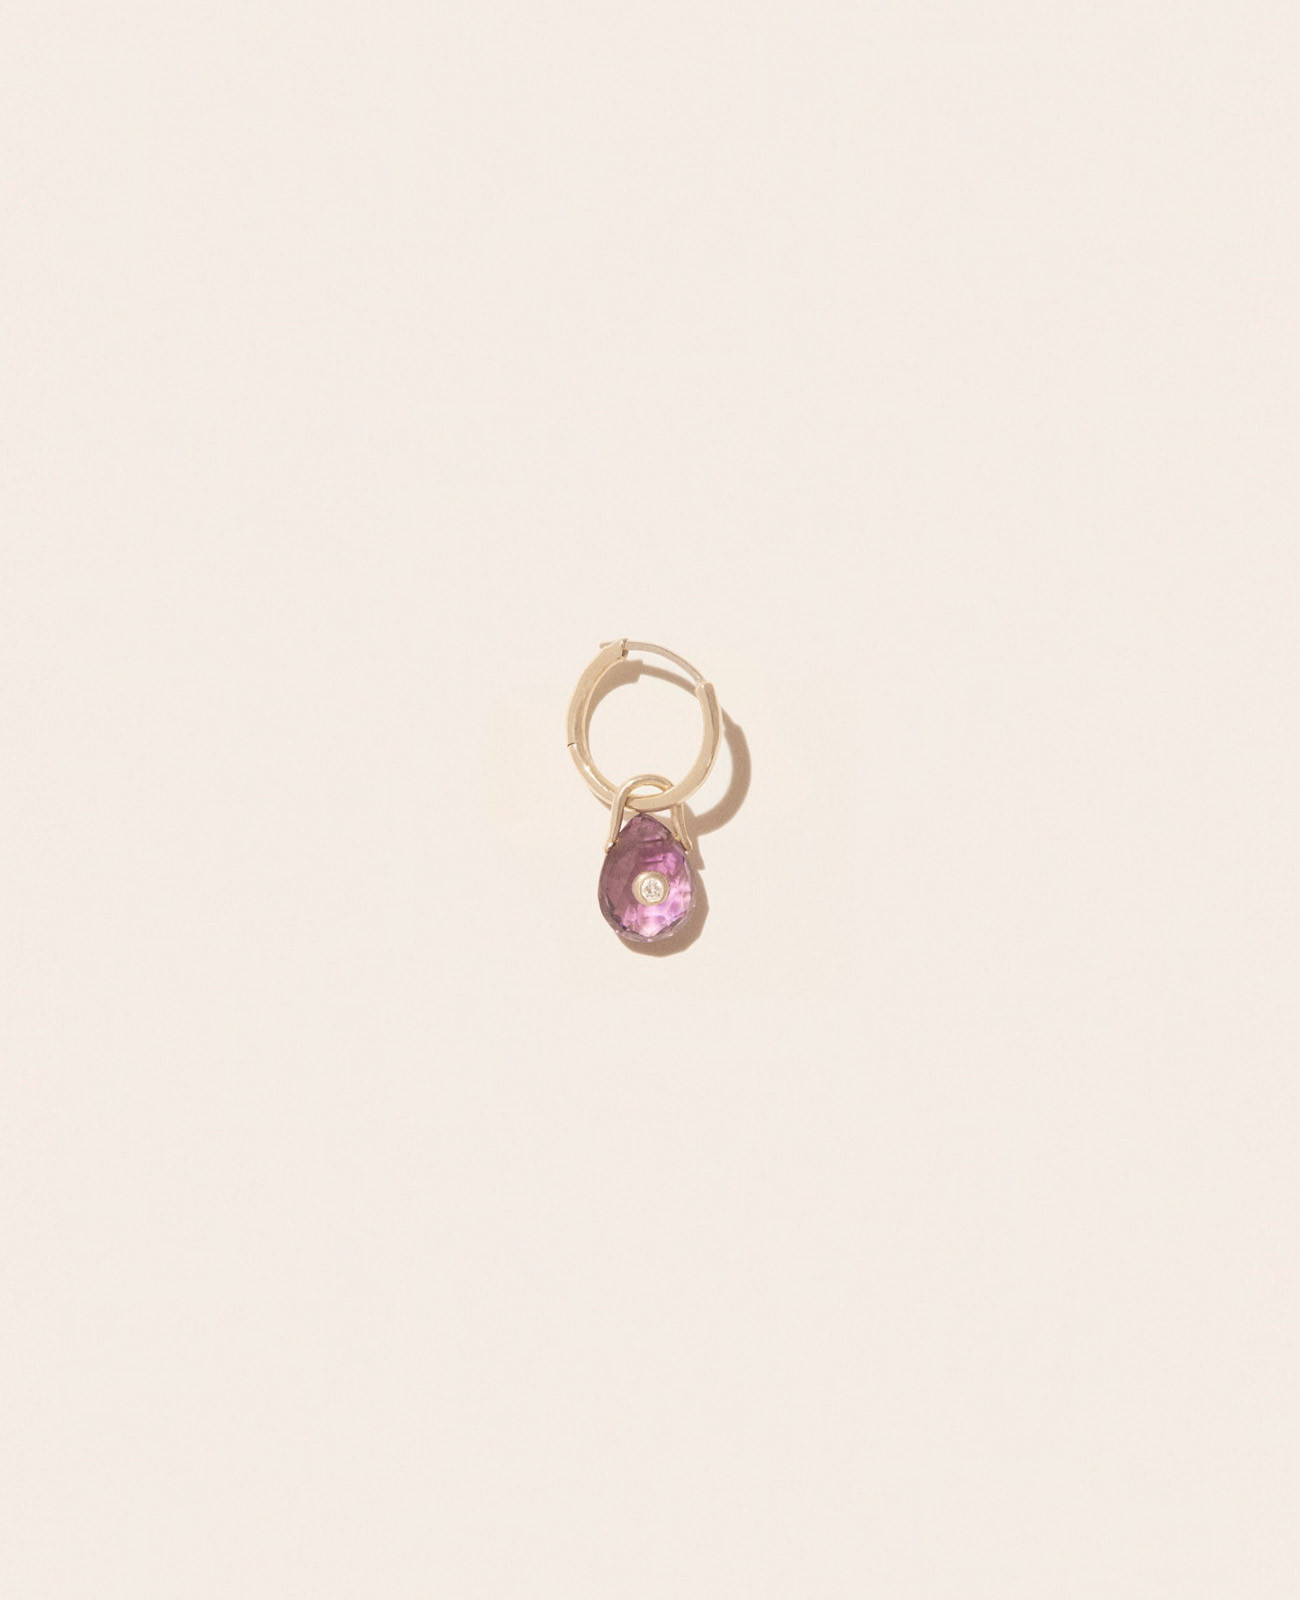 ORSO PURPLE AMETHYST earring pascale monvoisin jewelry paris